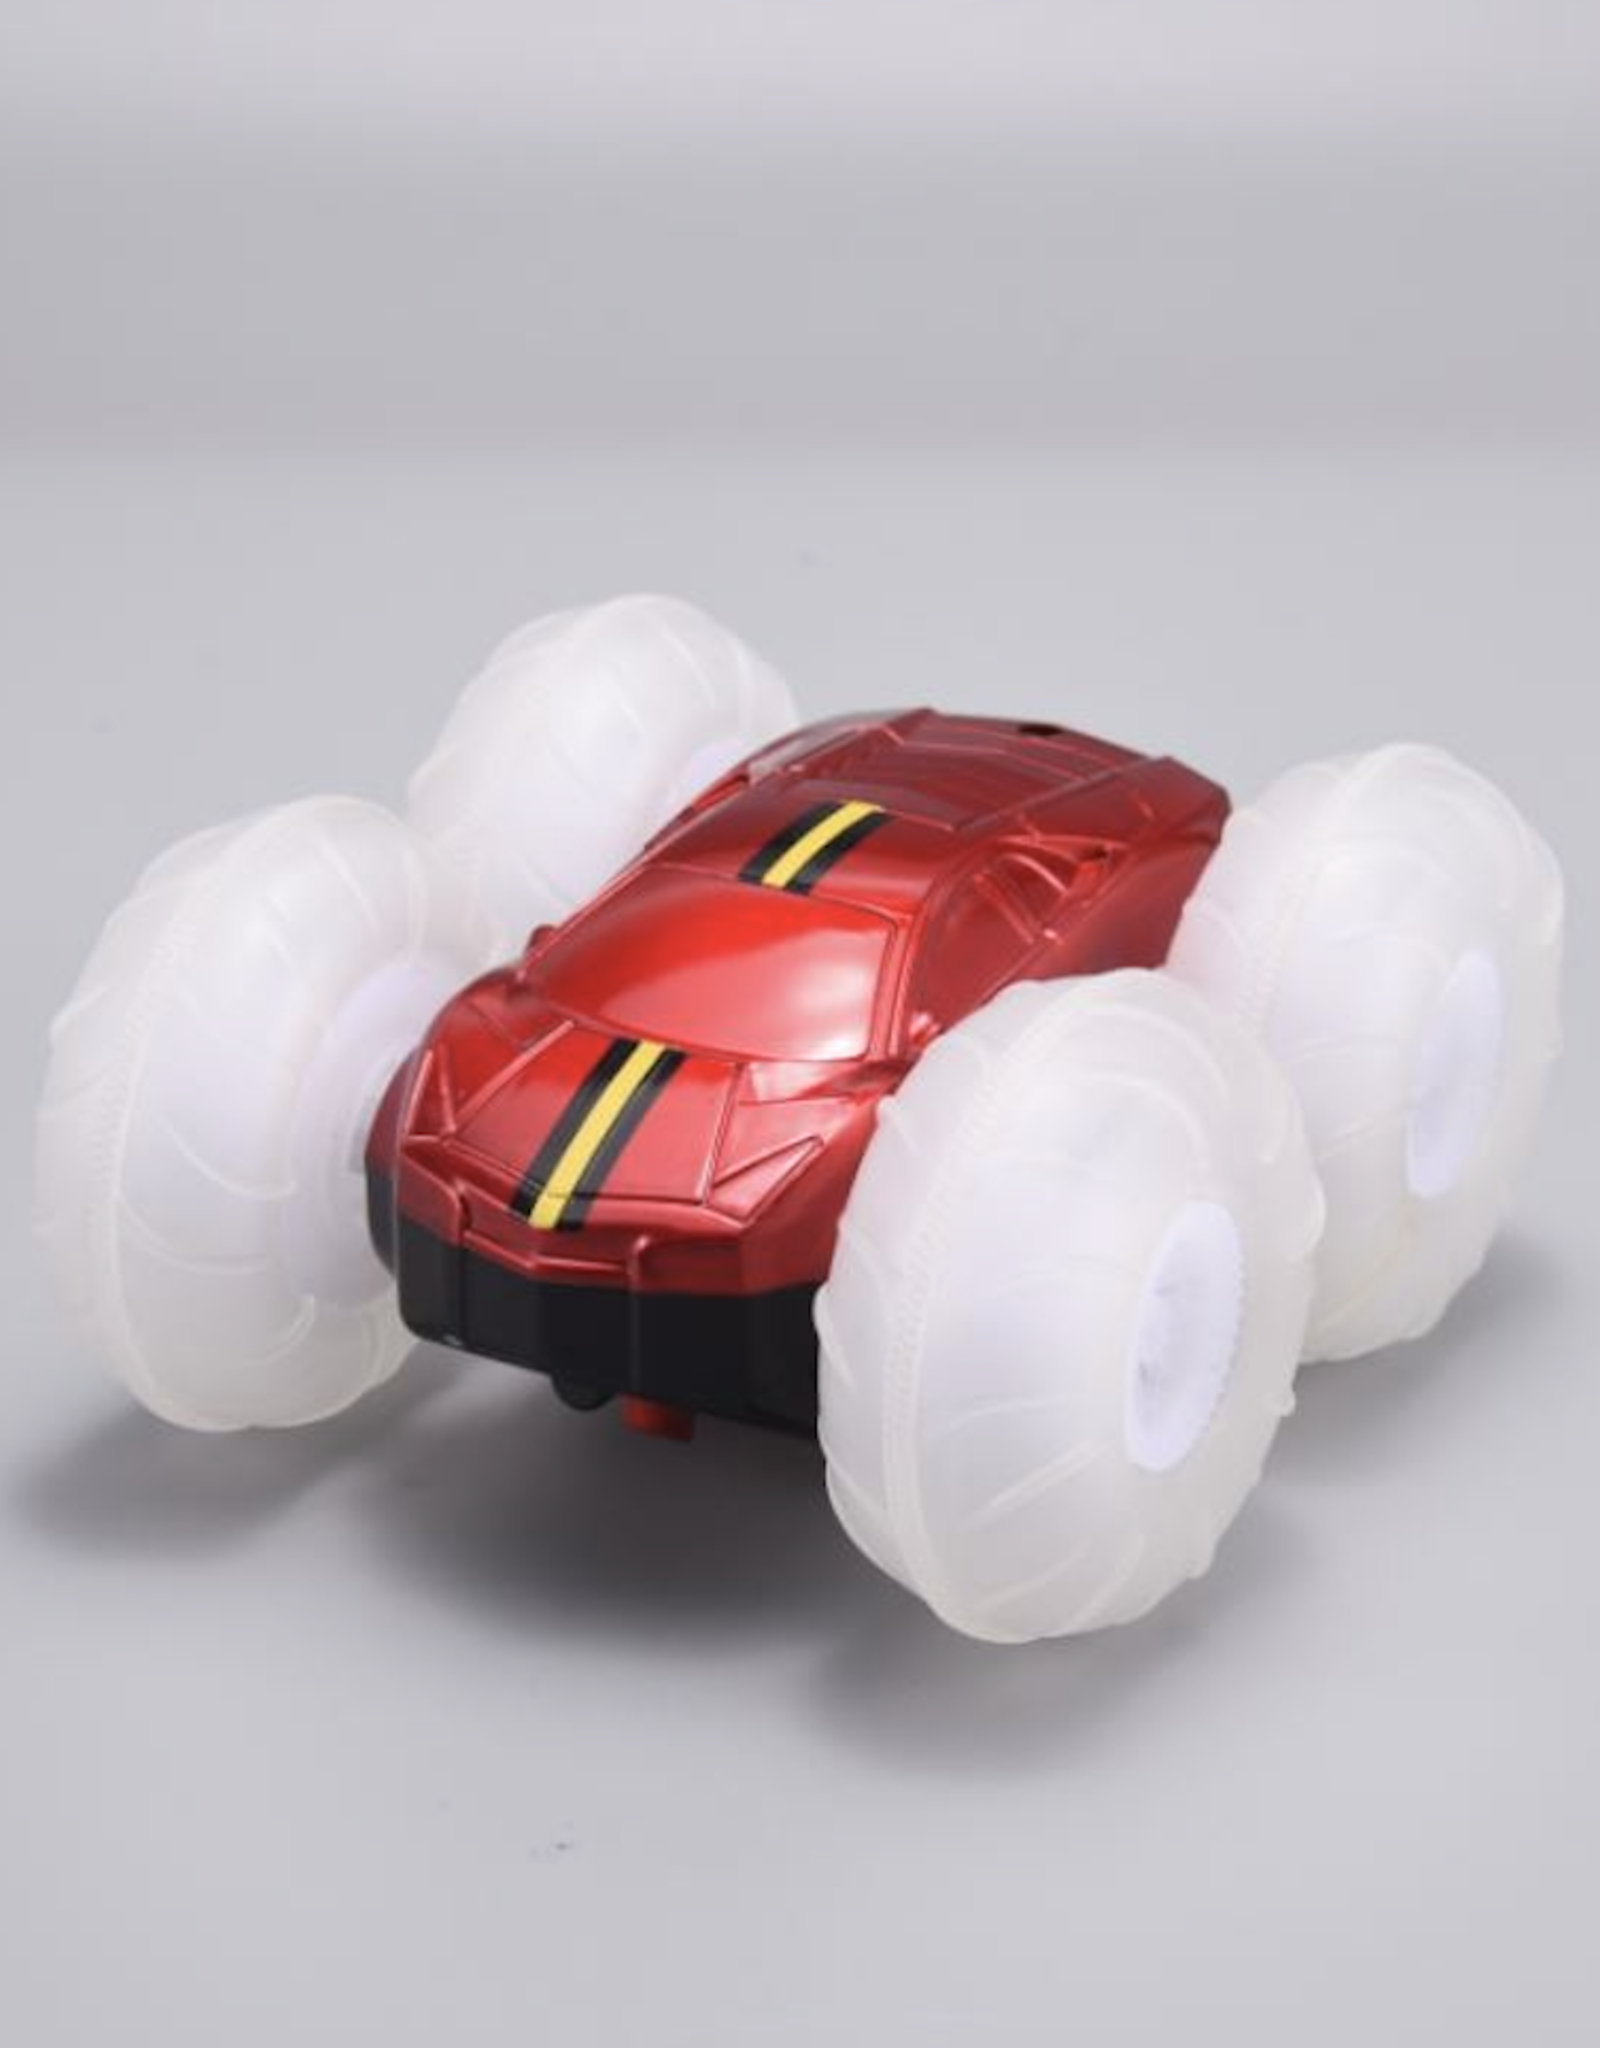 Red Flip Racer Turbo Twister